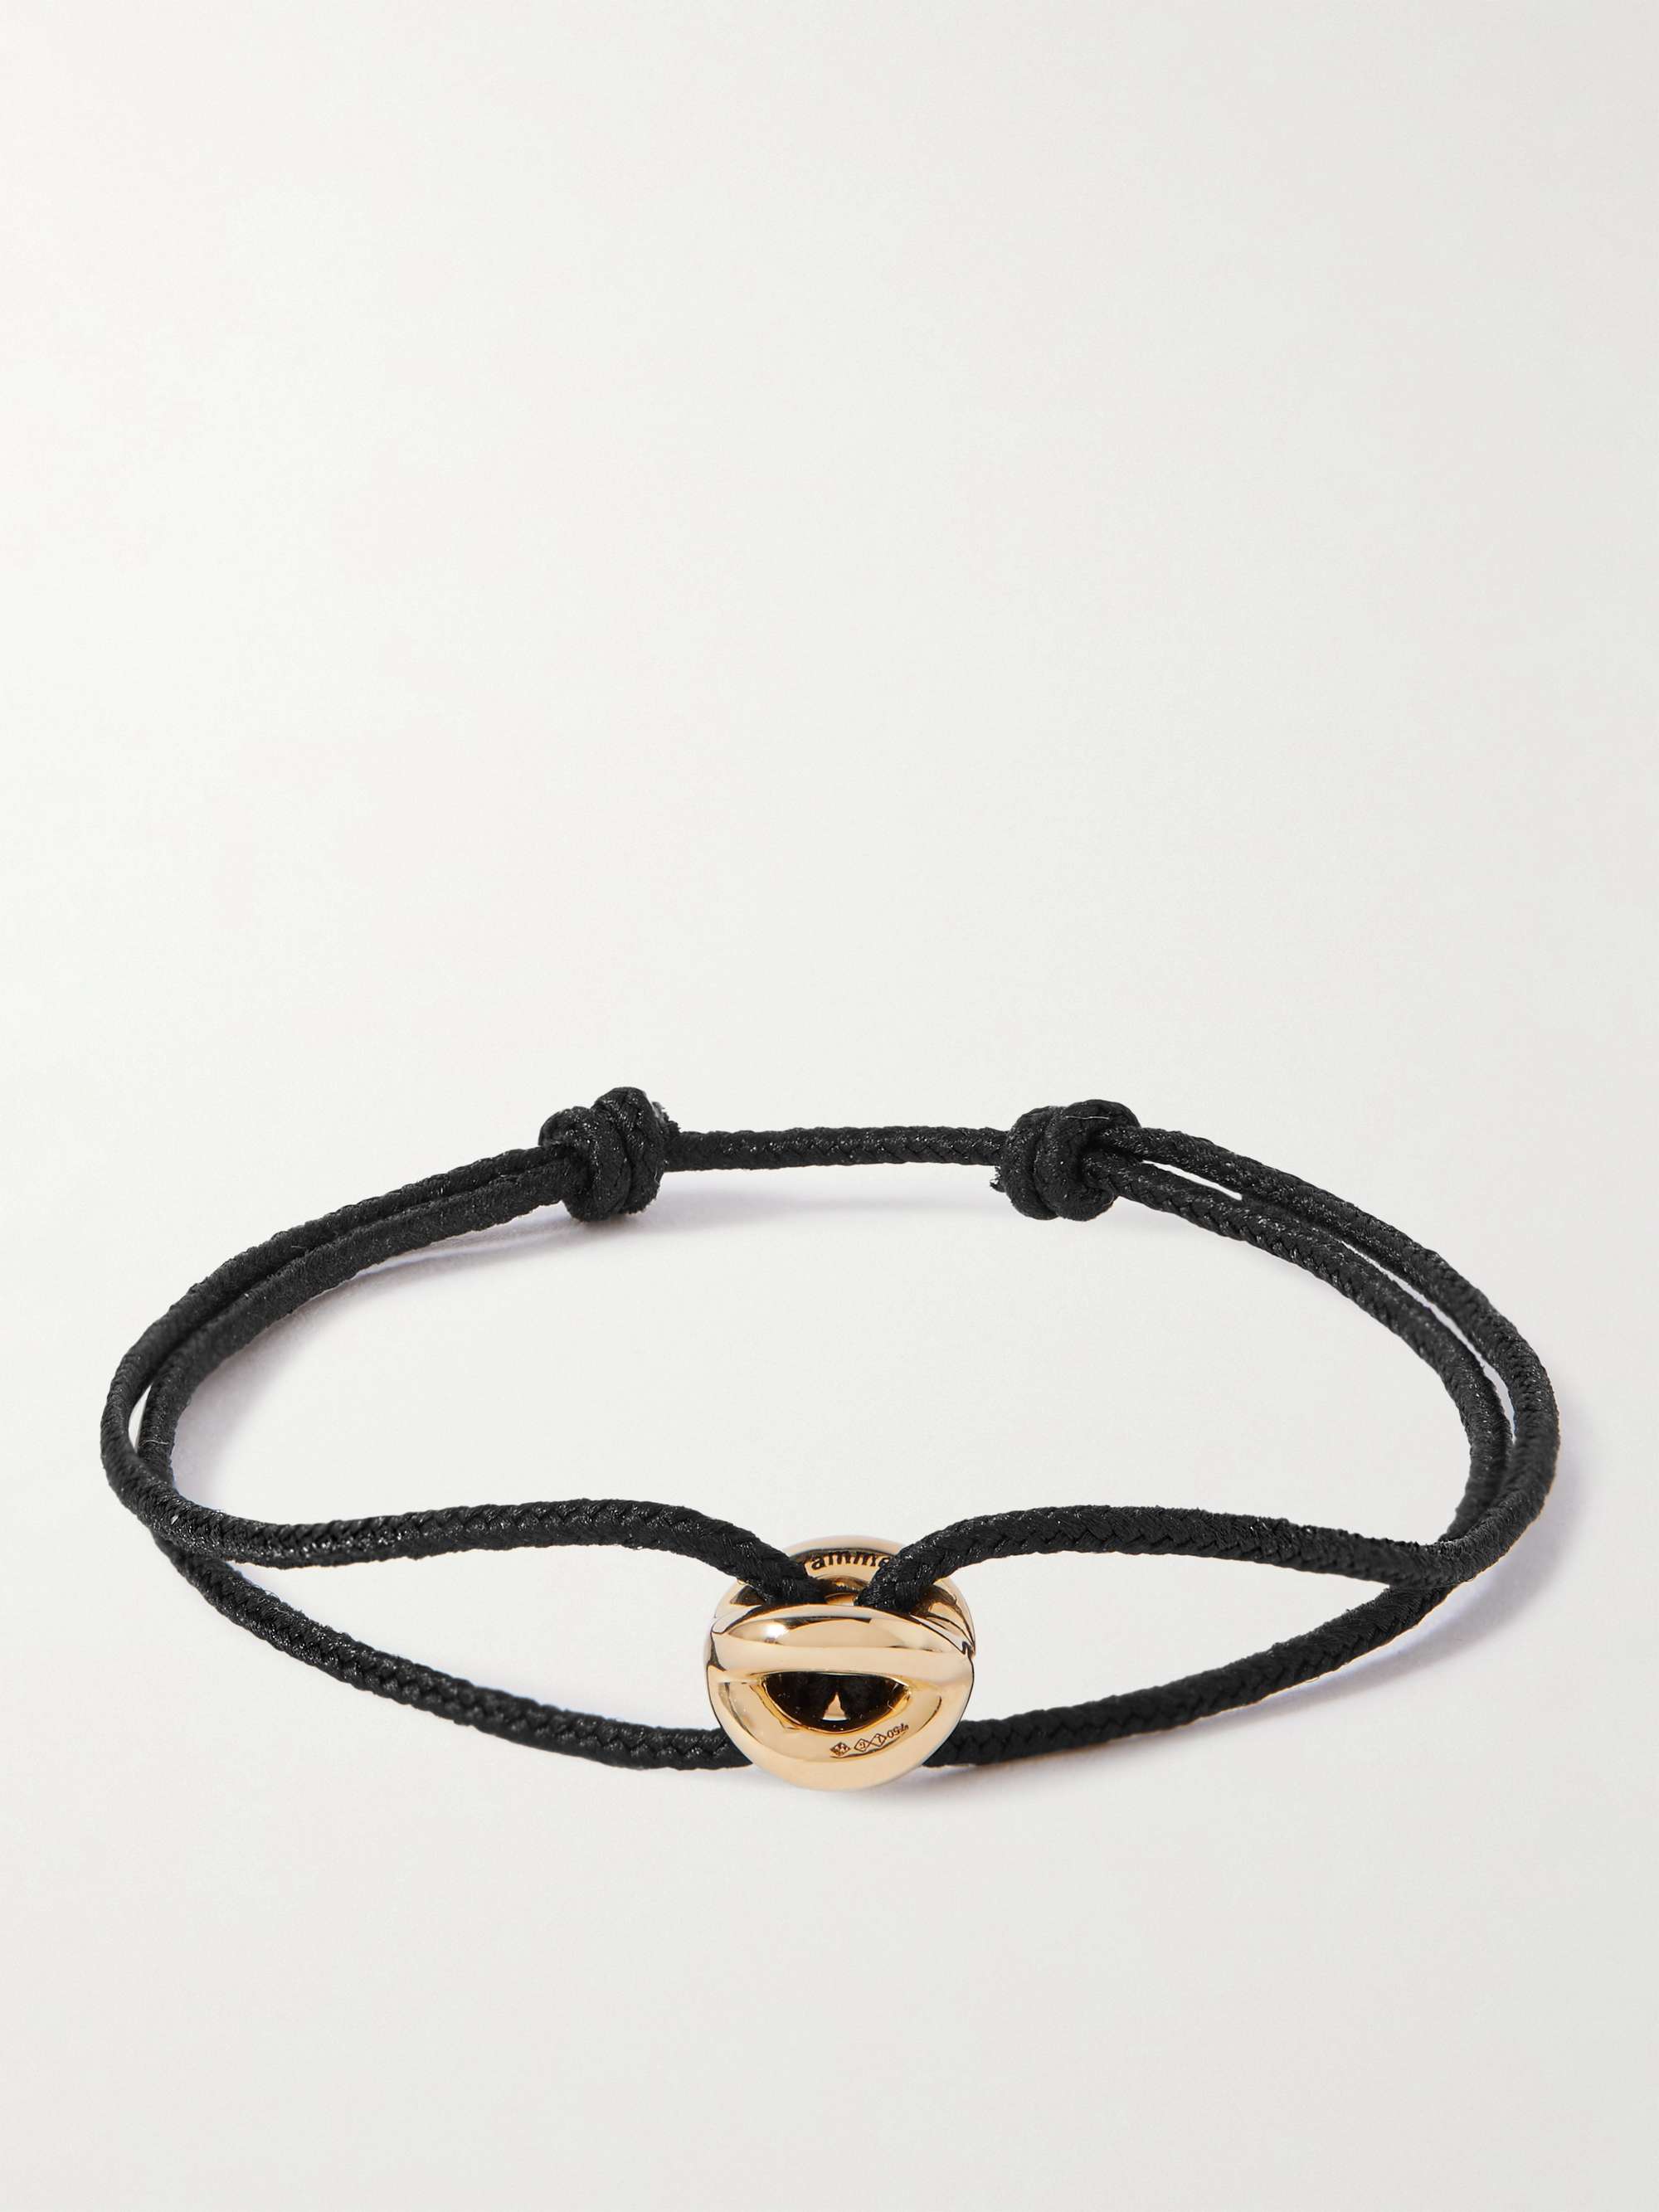 Bottega Veneta® Men's Braid Leather Bracelet in Black. Shop online